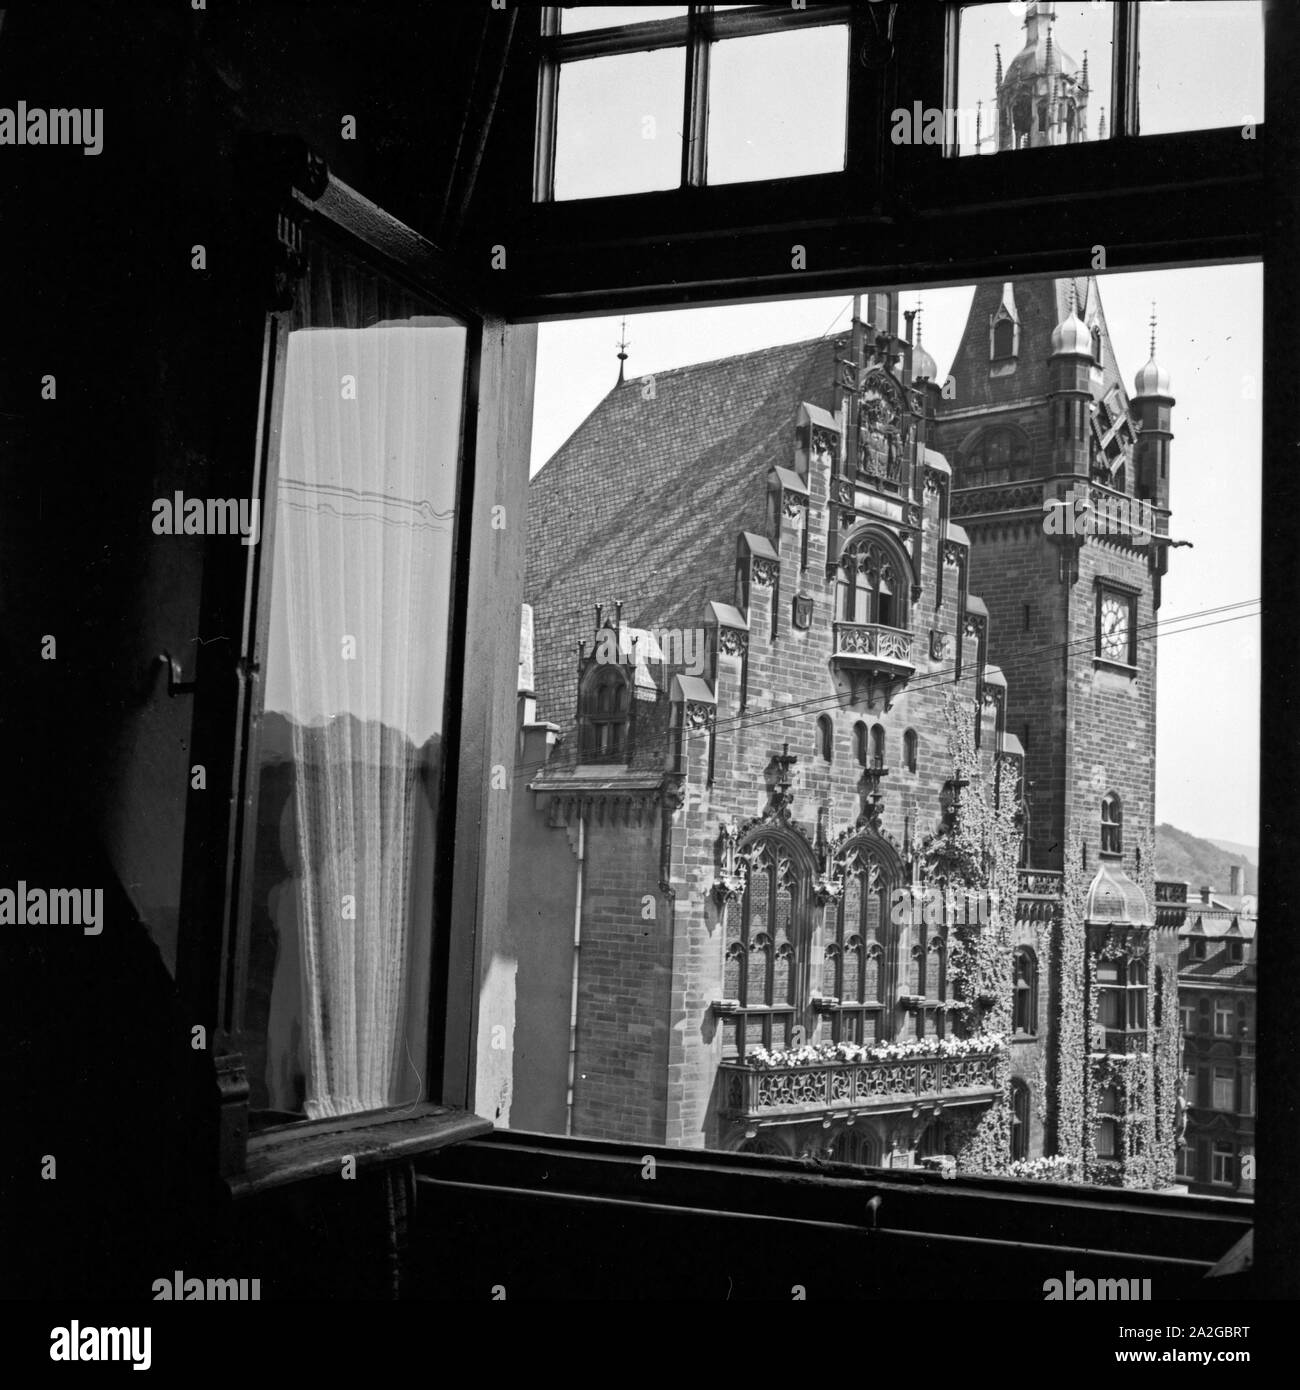 Giebel und Uhrturm am Rathaus in Wuppertal Elberfeld, Deutschland 1930er Jahre. Gable and clock tower of Elberfeld city hall, Germany 1930s. Stock Photo